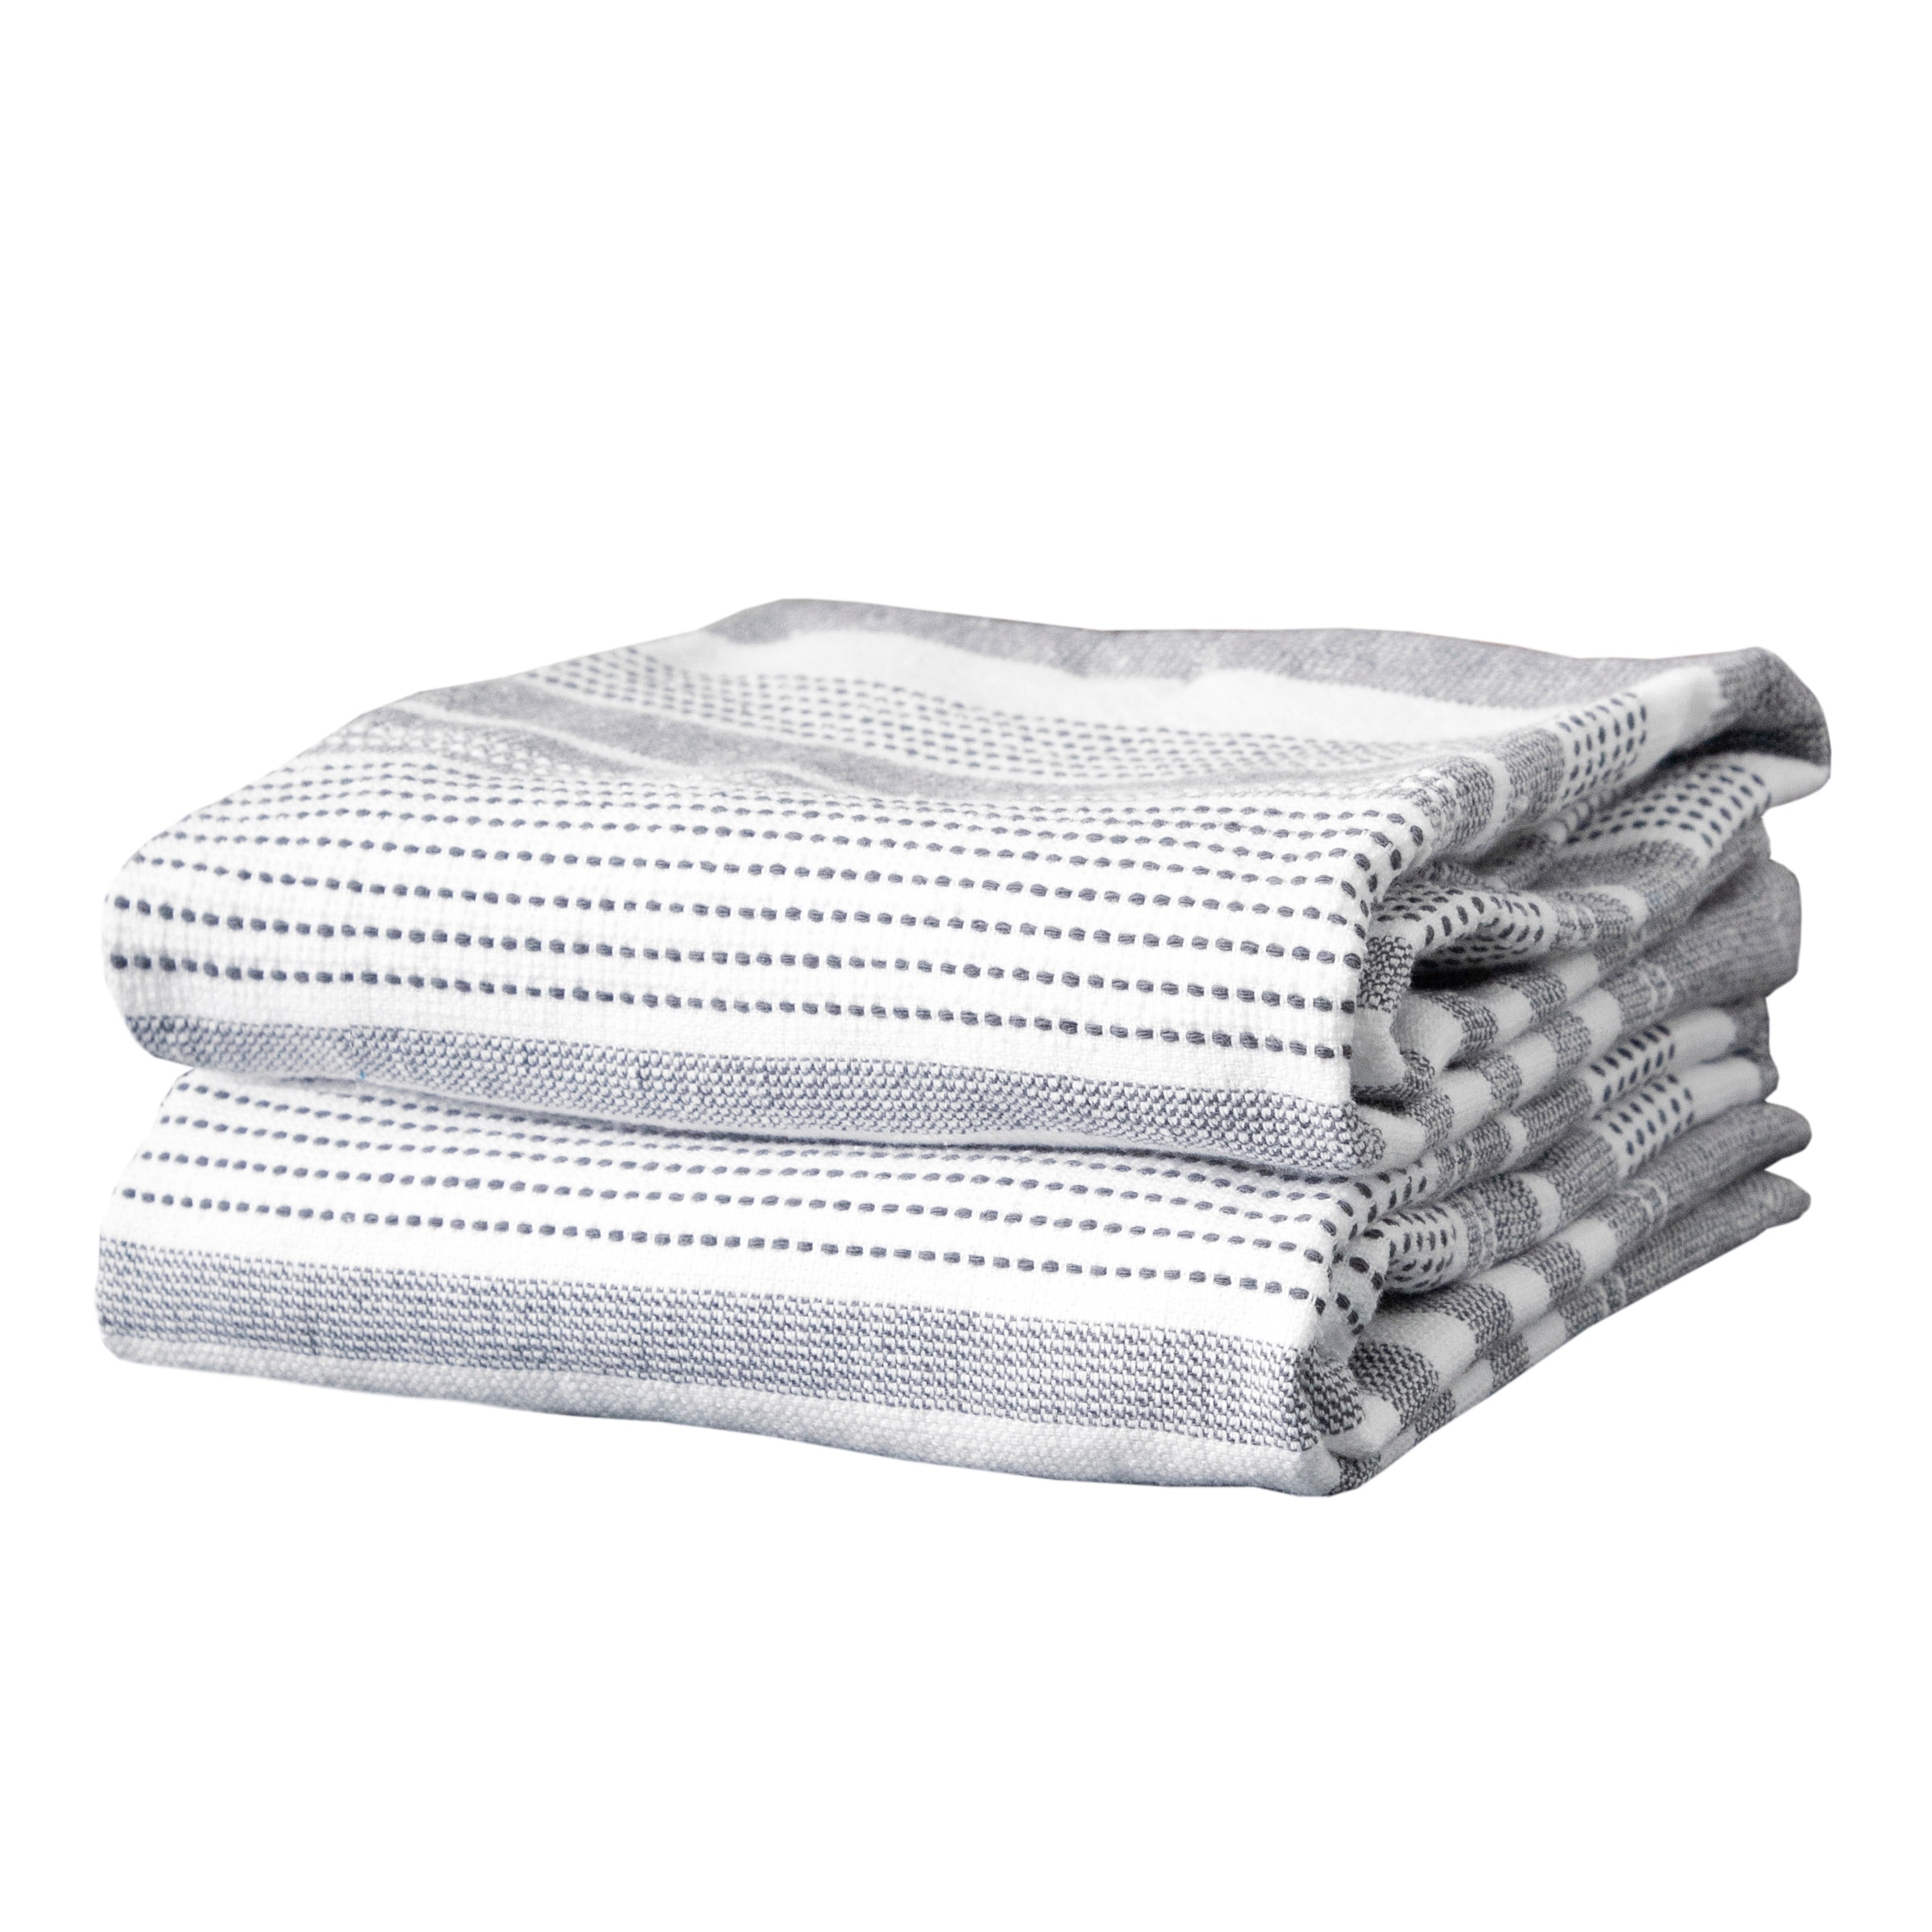 White River Dish Towel Set - 2 Pack - Cabelas - White RIVER 